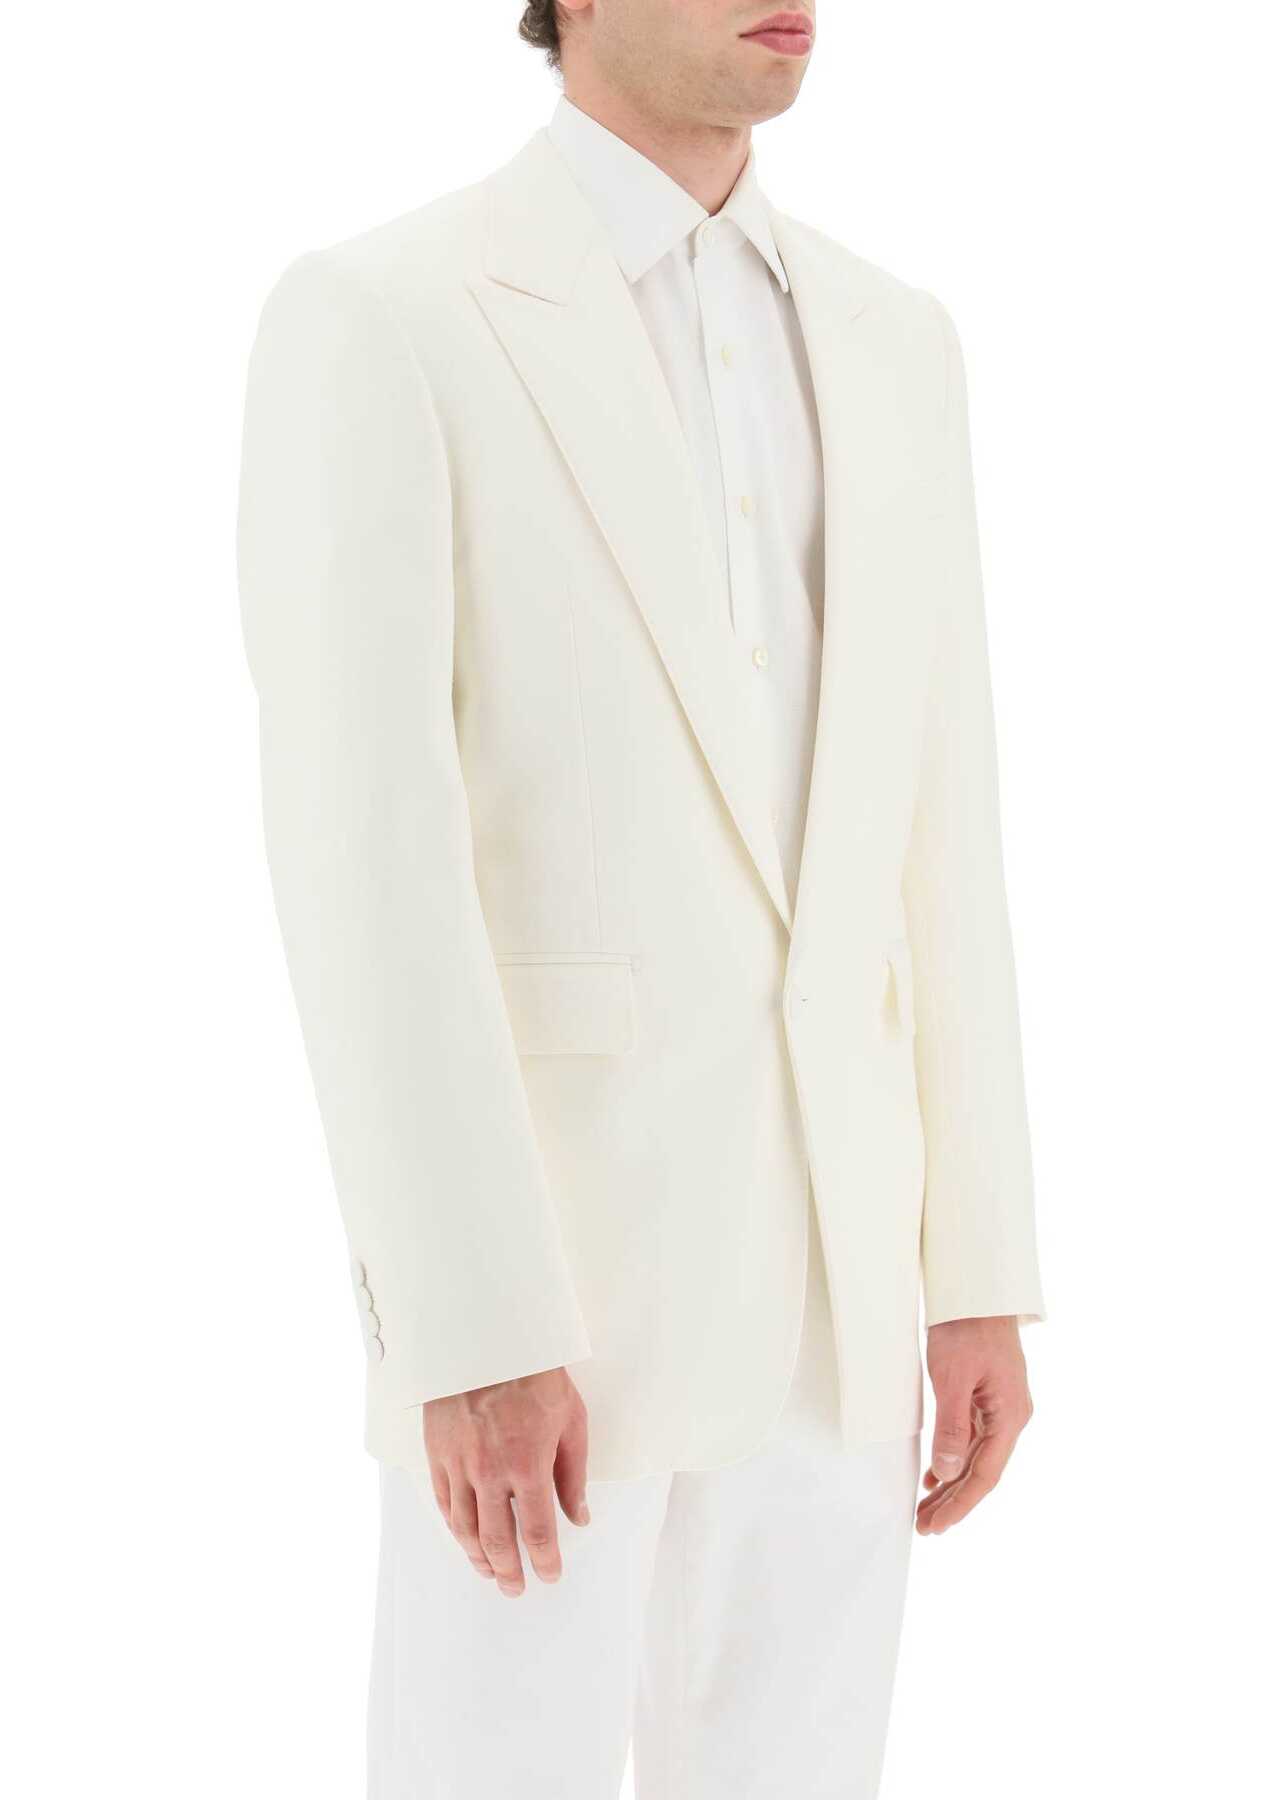 Alexander McQueen Tailored Wool Jacket SOFT WHITE Alexander